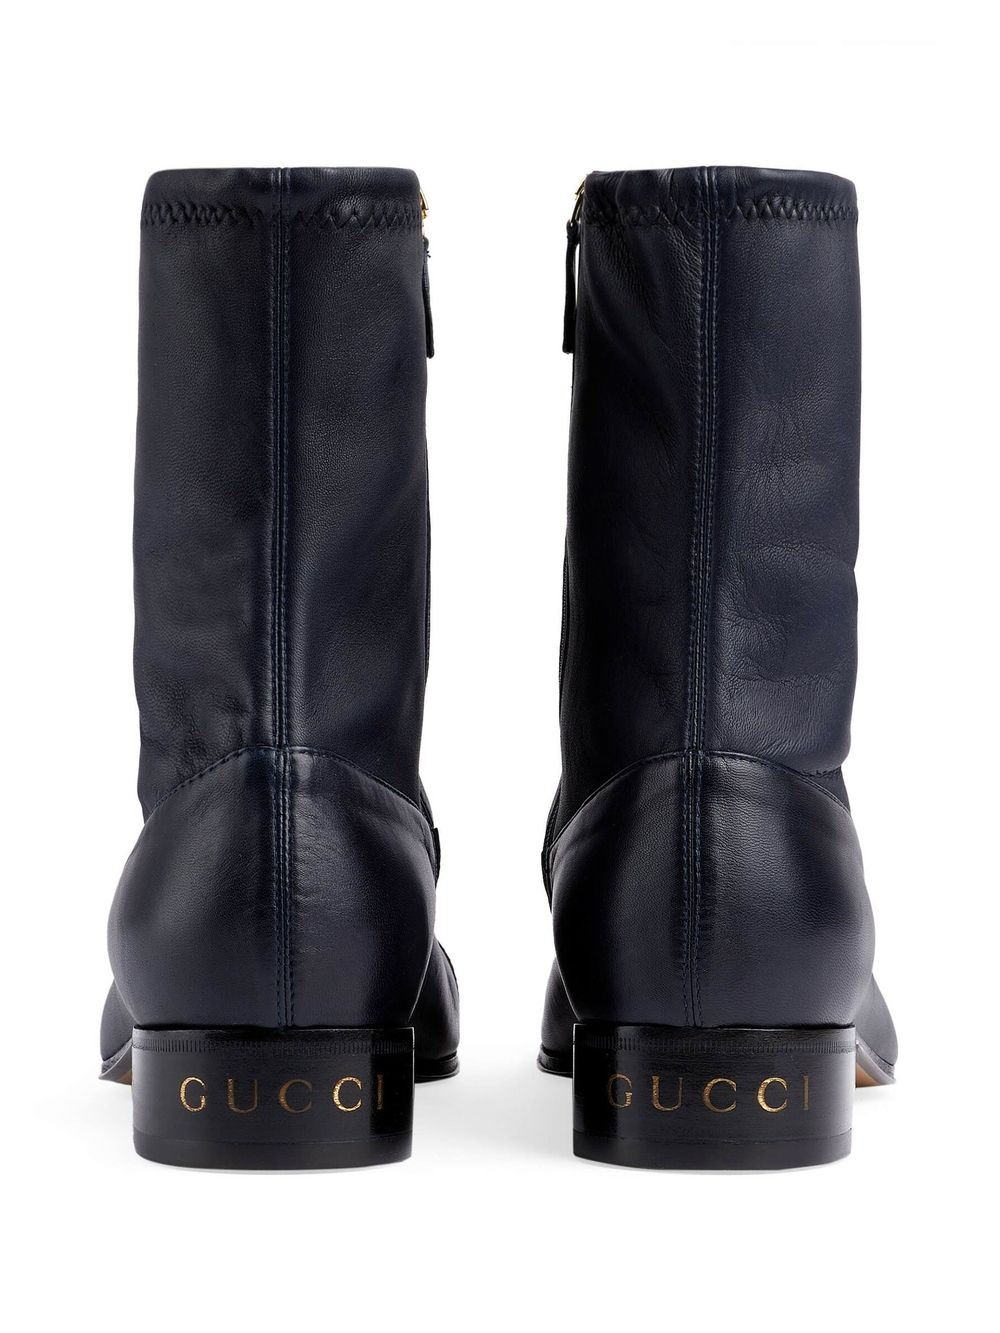 GucciLizard Boots at Fashion Clinic